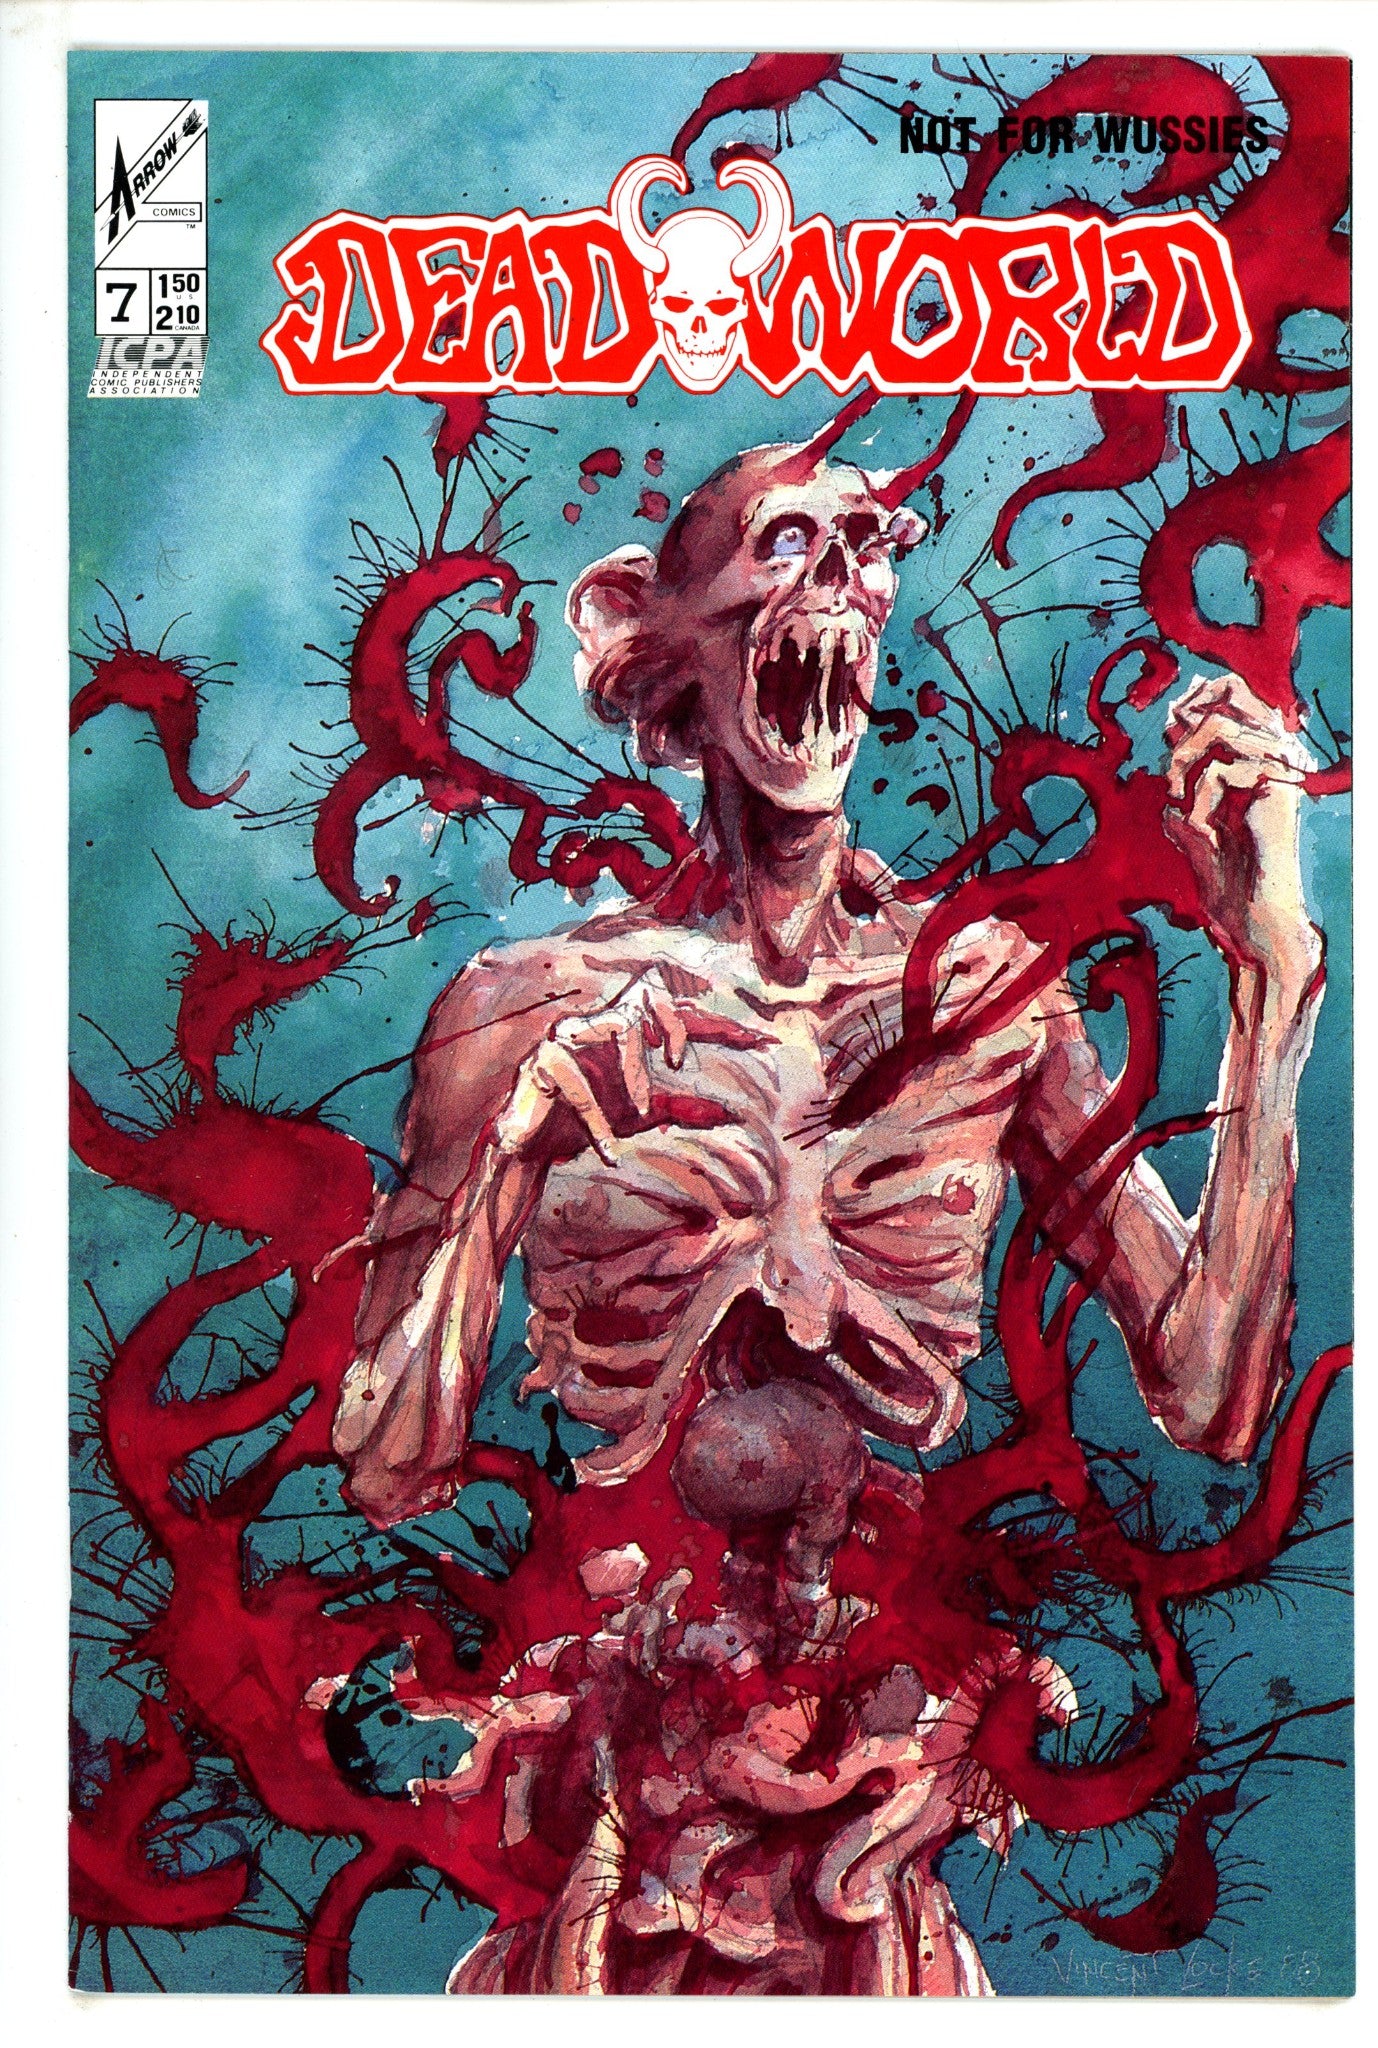 Deadworld Vol 1 7 Graphic Variant (1987)